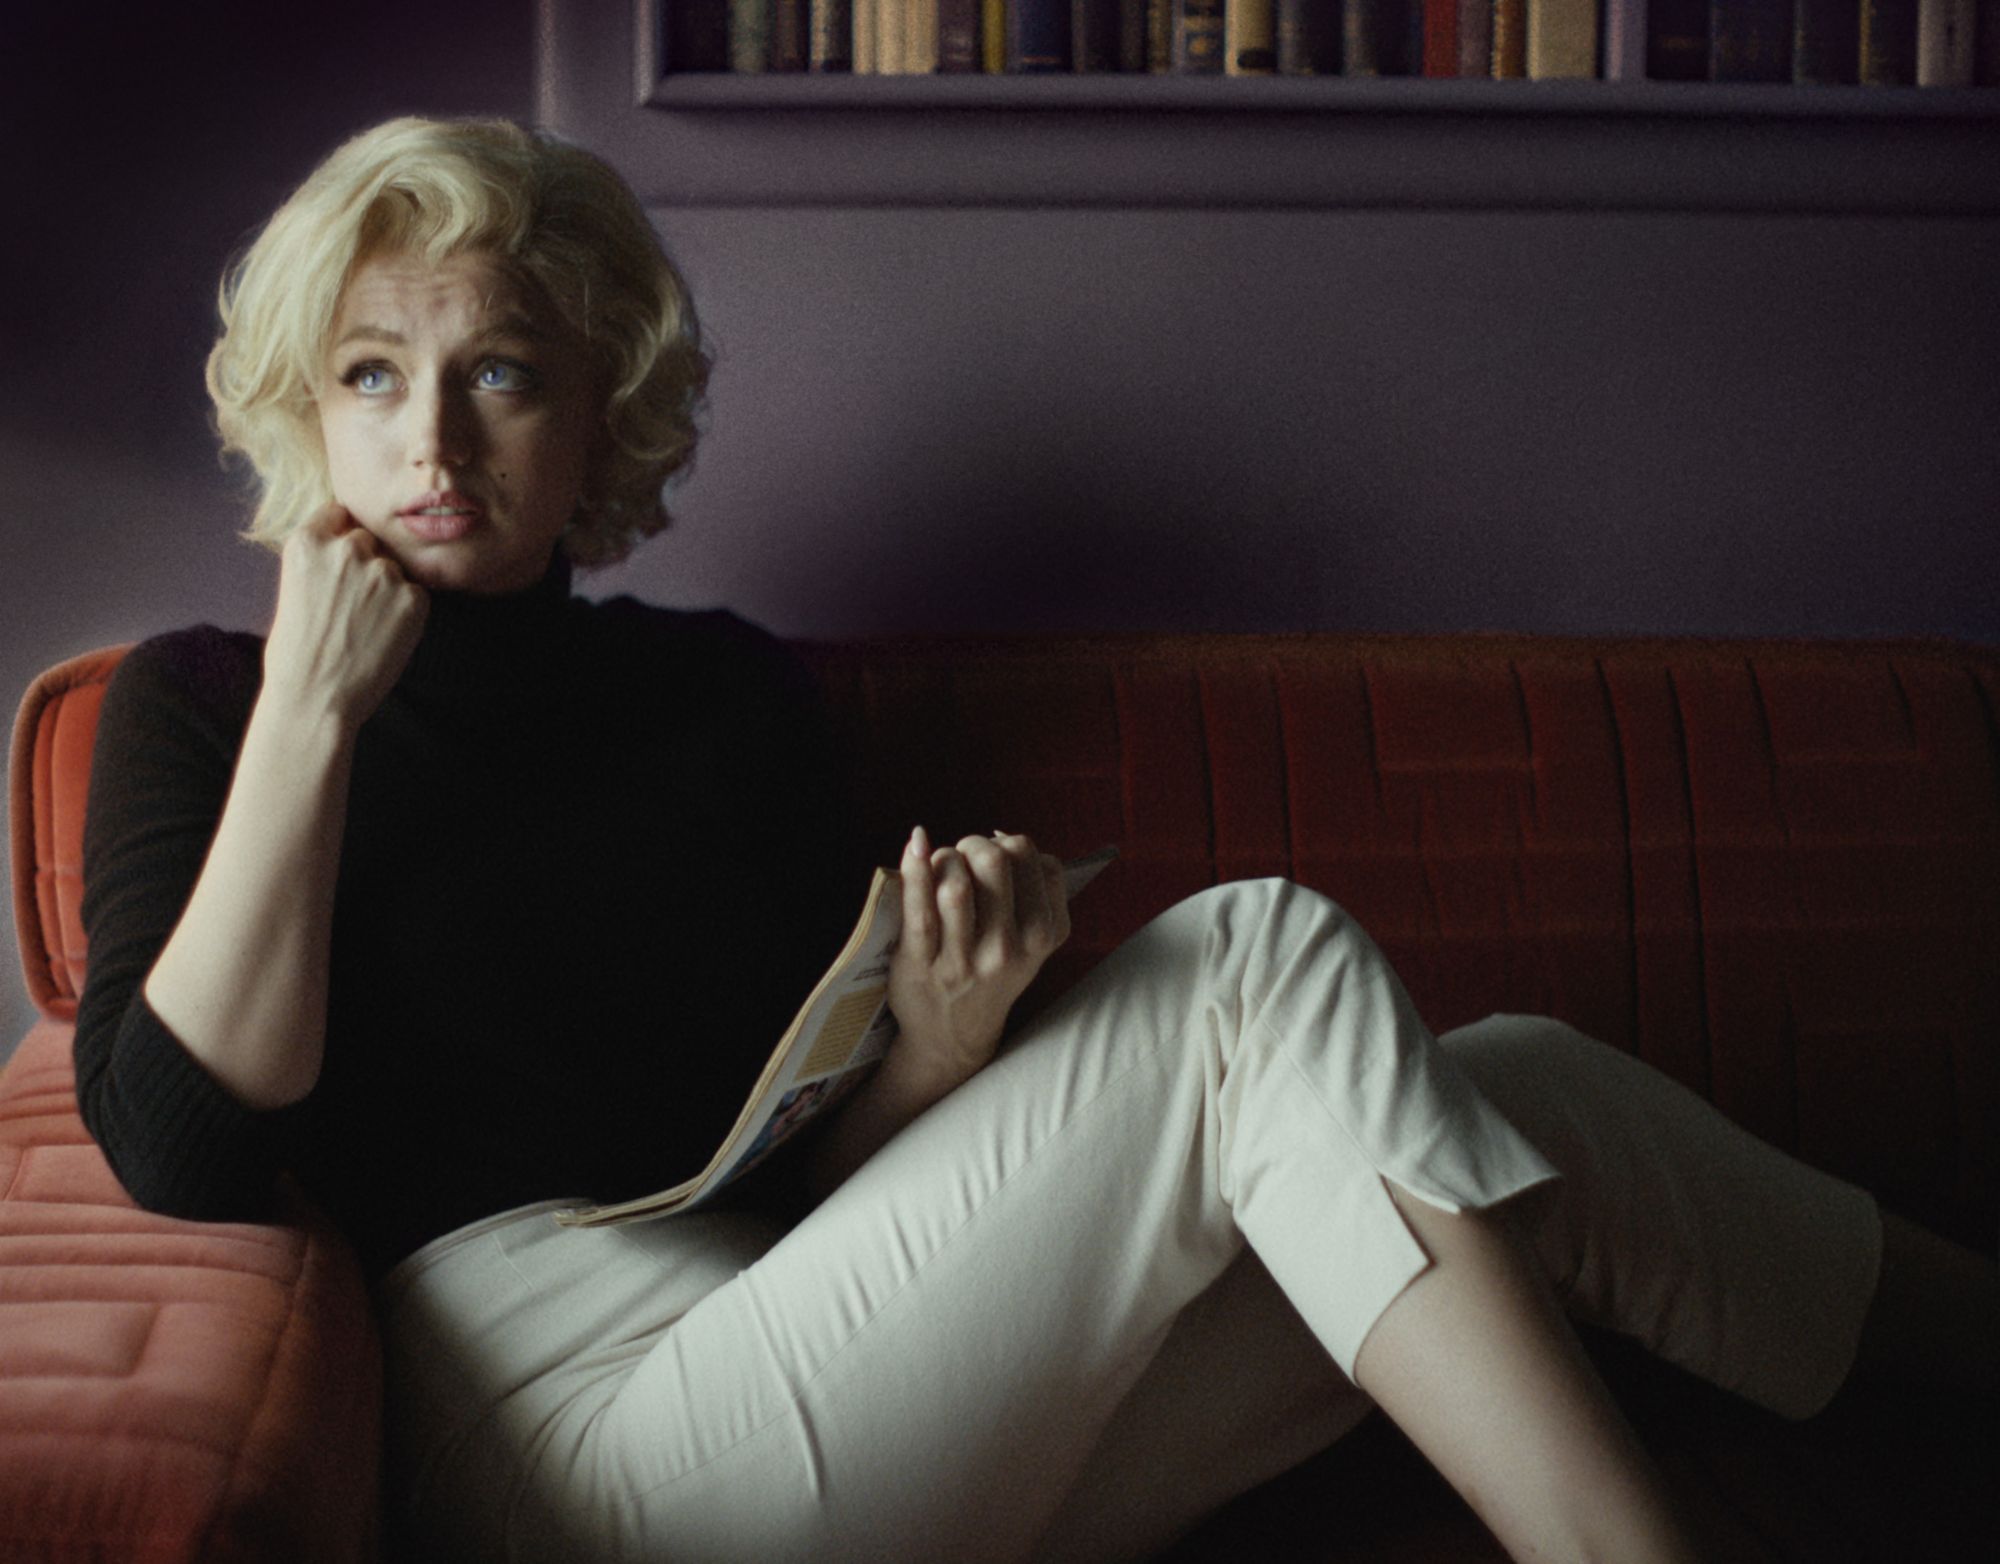 Blonde, recensione: la povera Marilyn Monroe non merita questo film